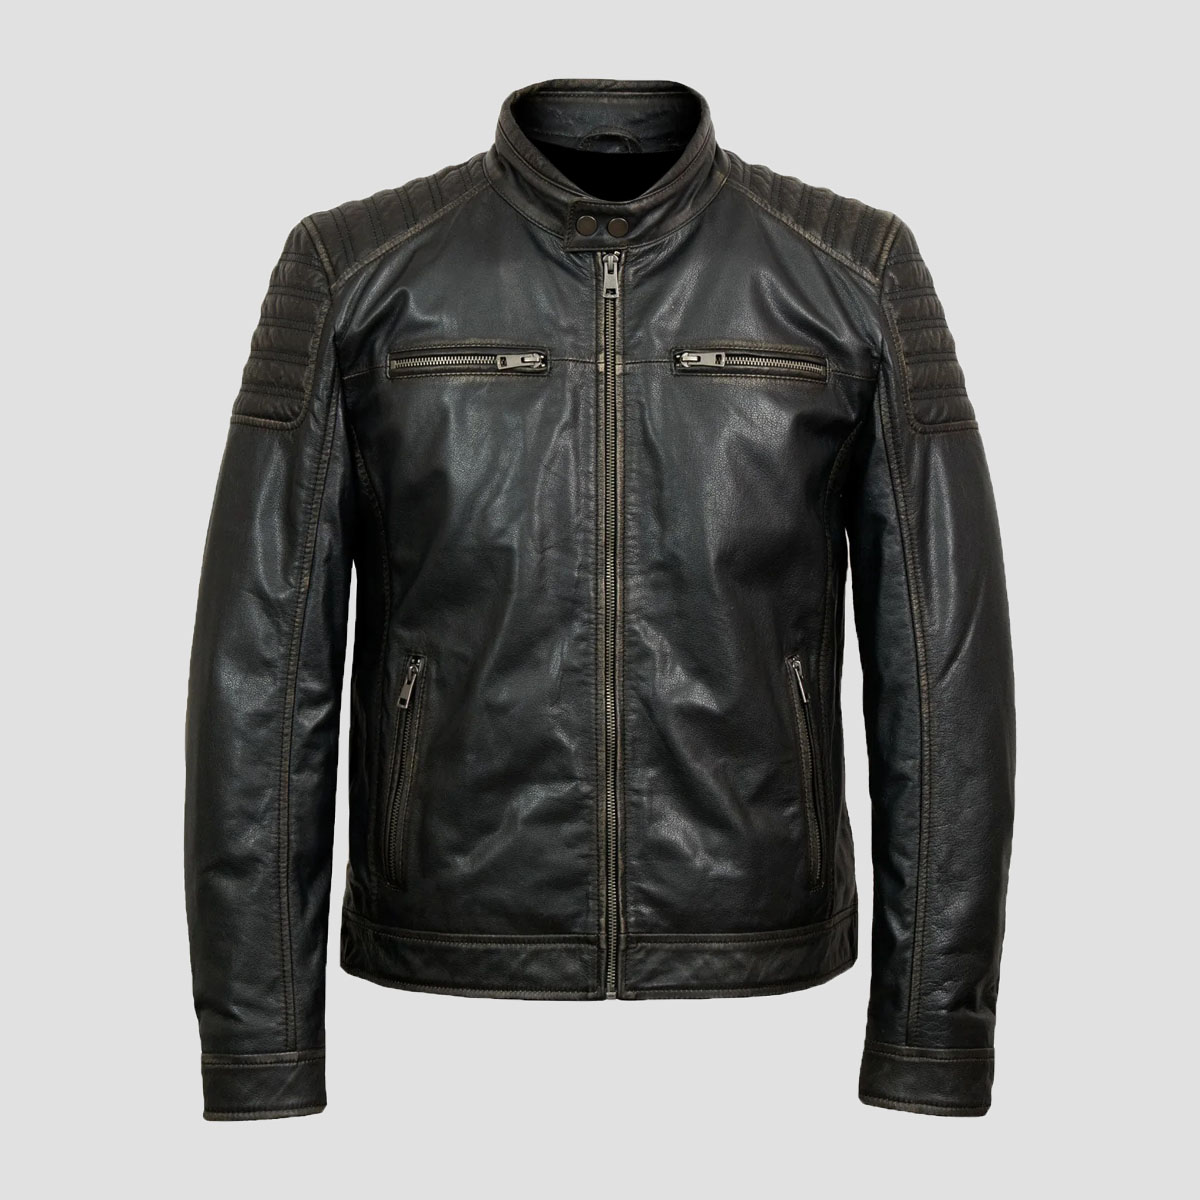 Distressed Brown Motorcycle Vintage Leather Jacket - The Vintage Leather